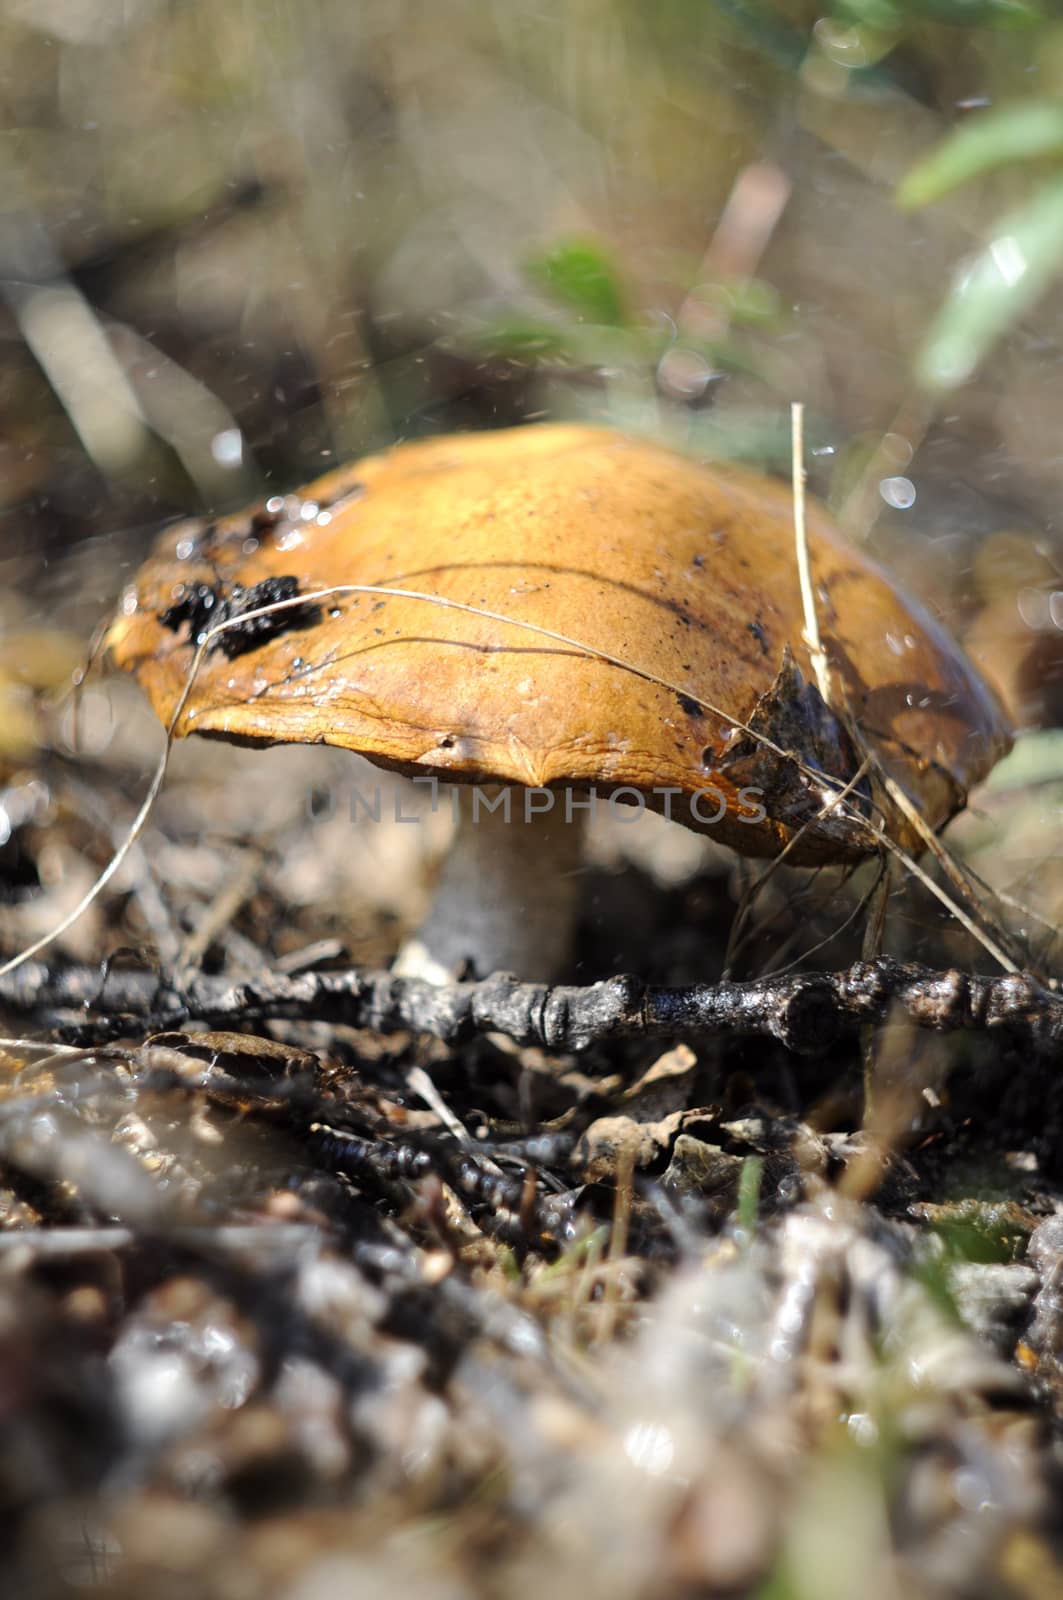 Big mushroom an aspen mushroom in the wood. by veronka72